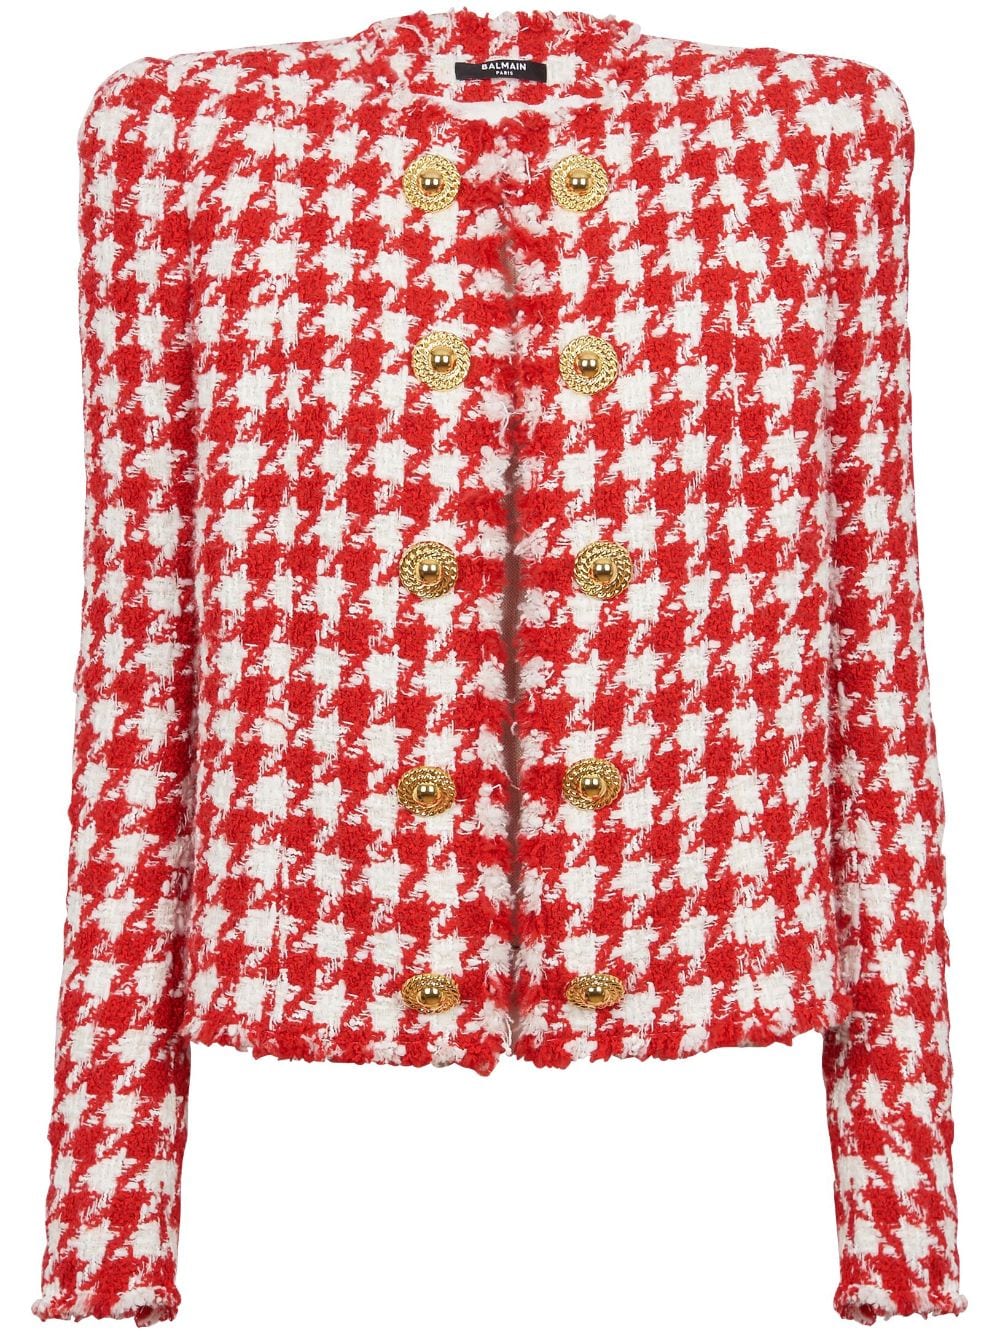 Senza colletto in tweed rosso/bianco con motivo pied de poule